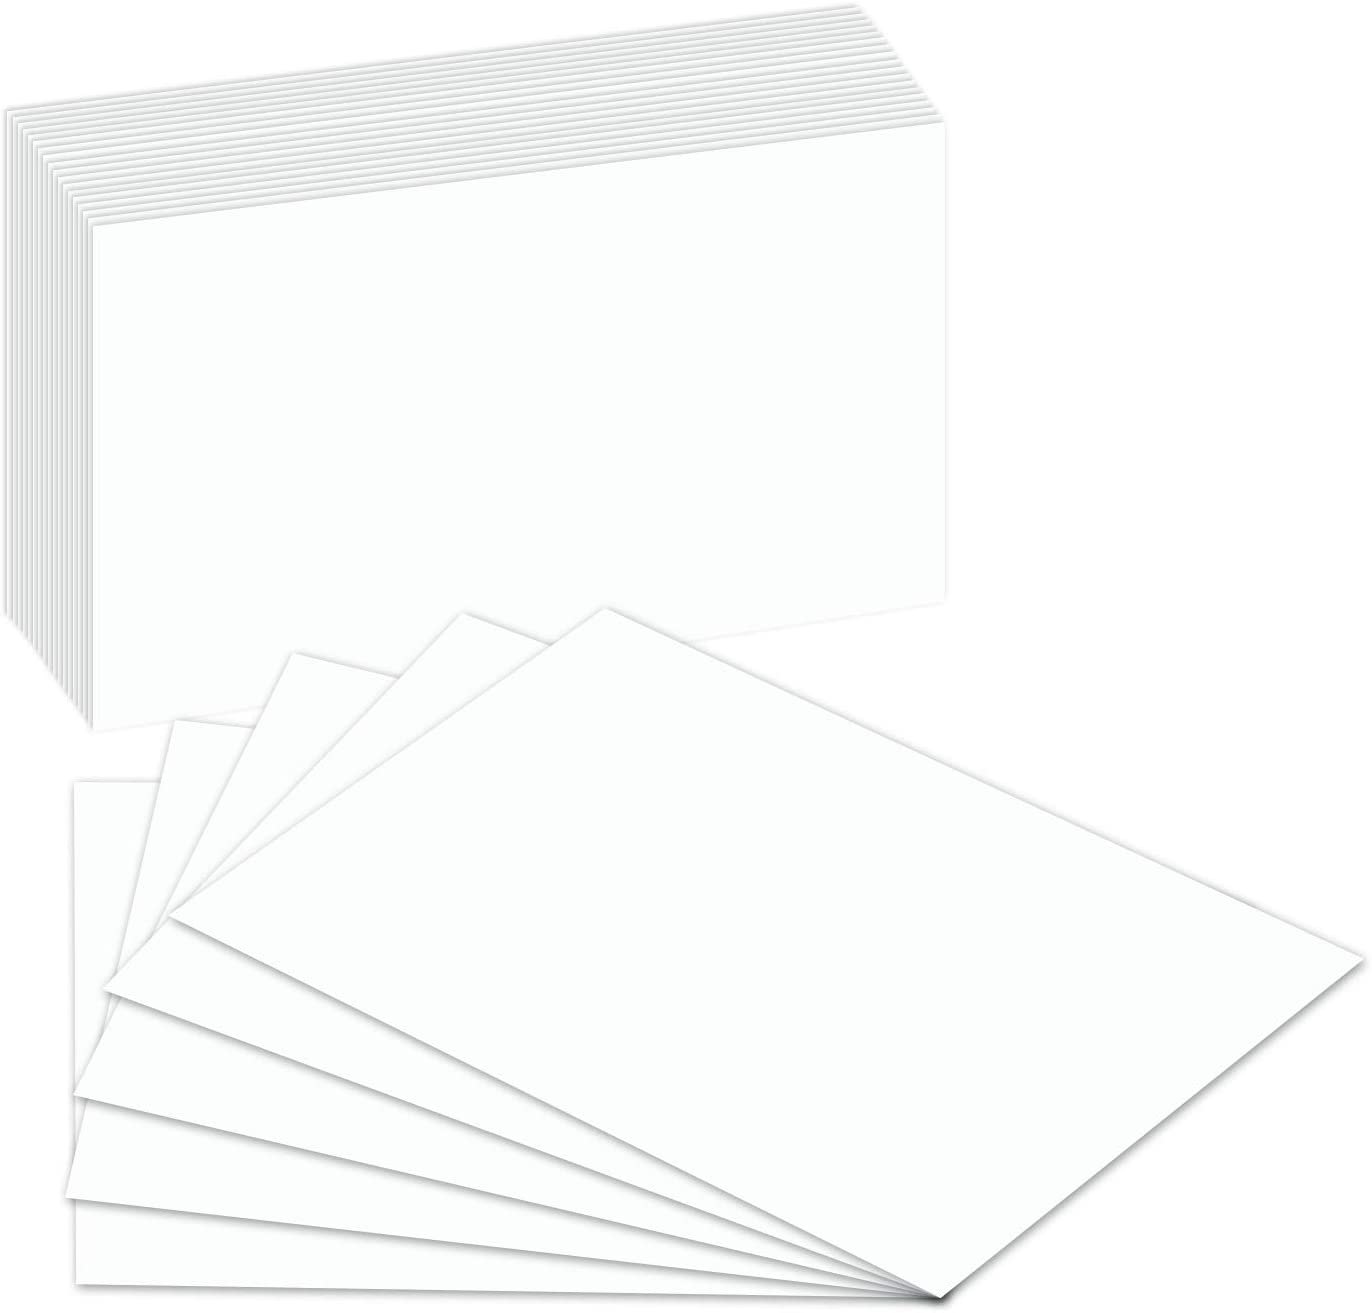 5x7 Index Cards Blank